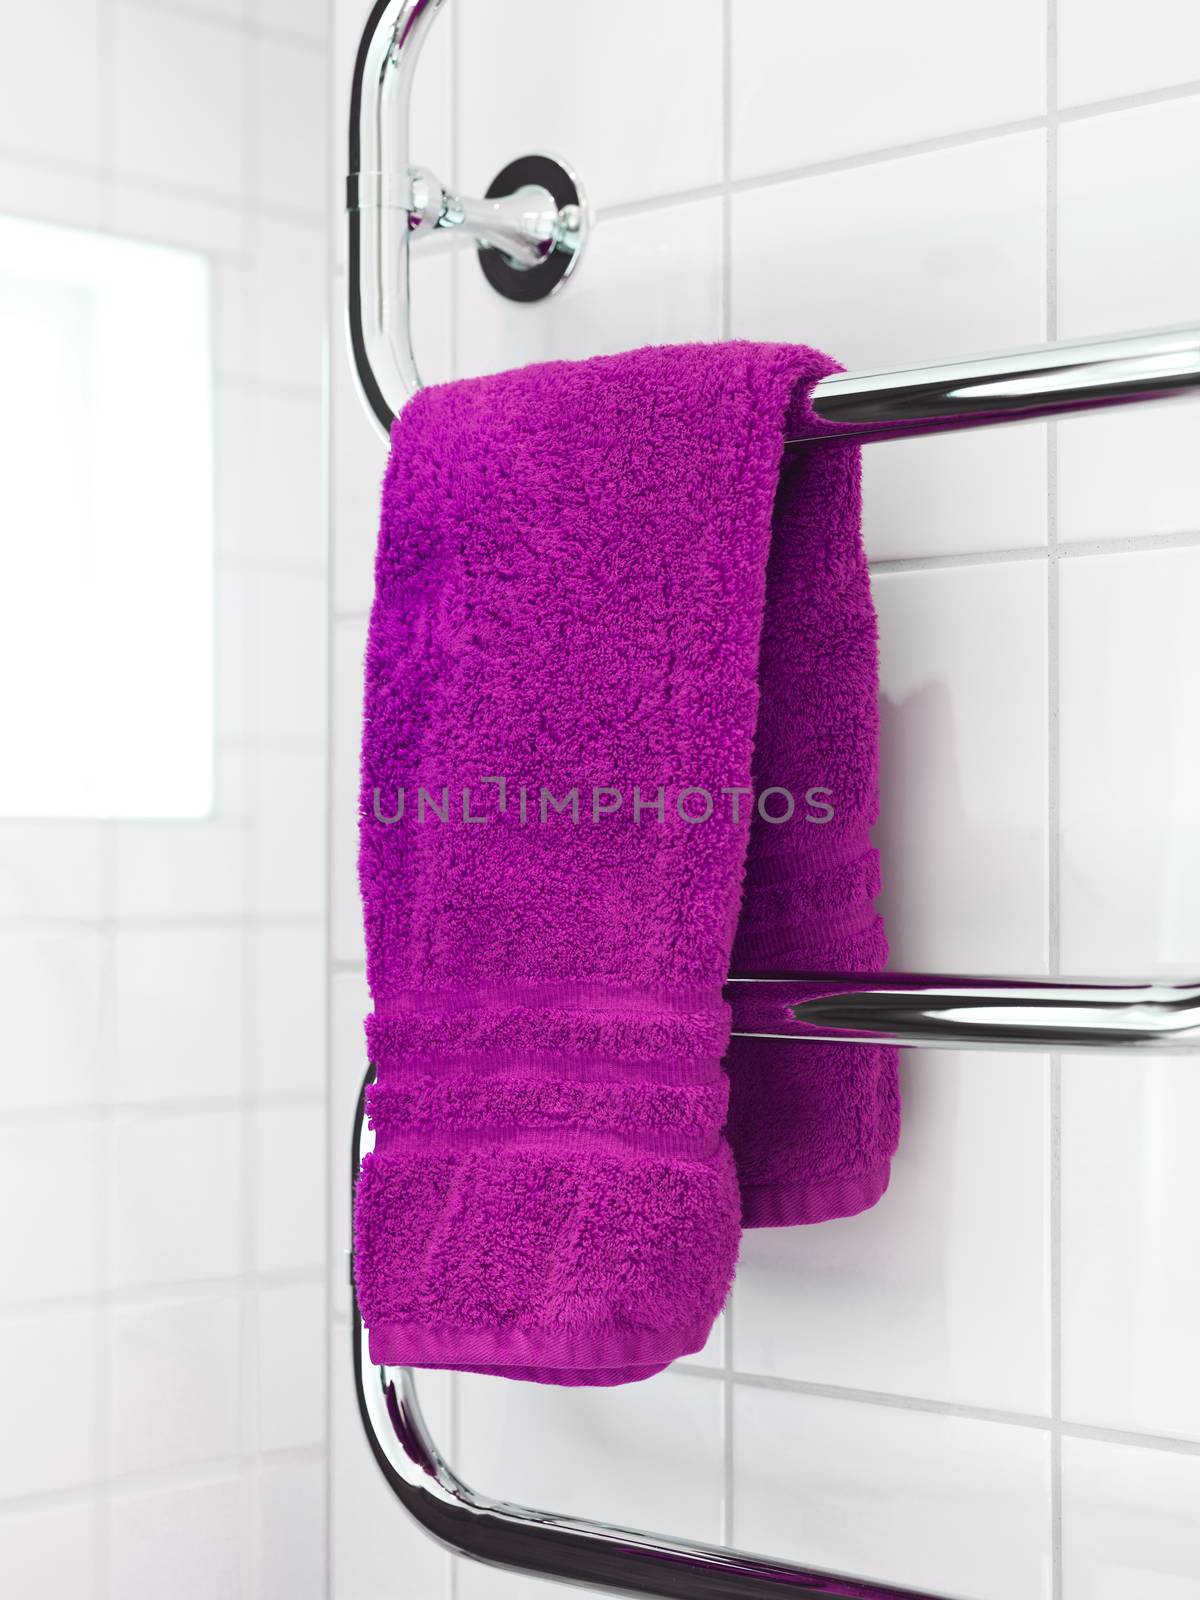 Pink towel on a dryer by gemenacom